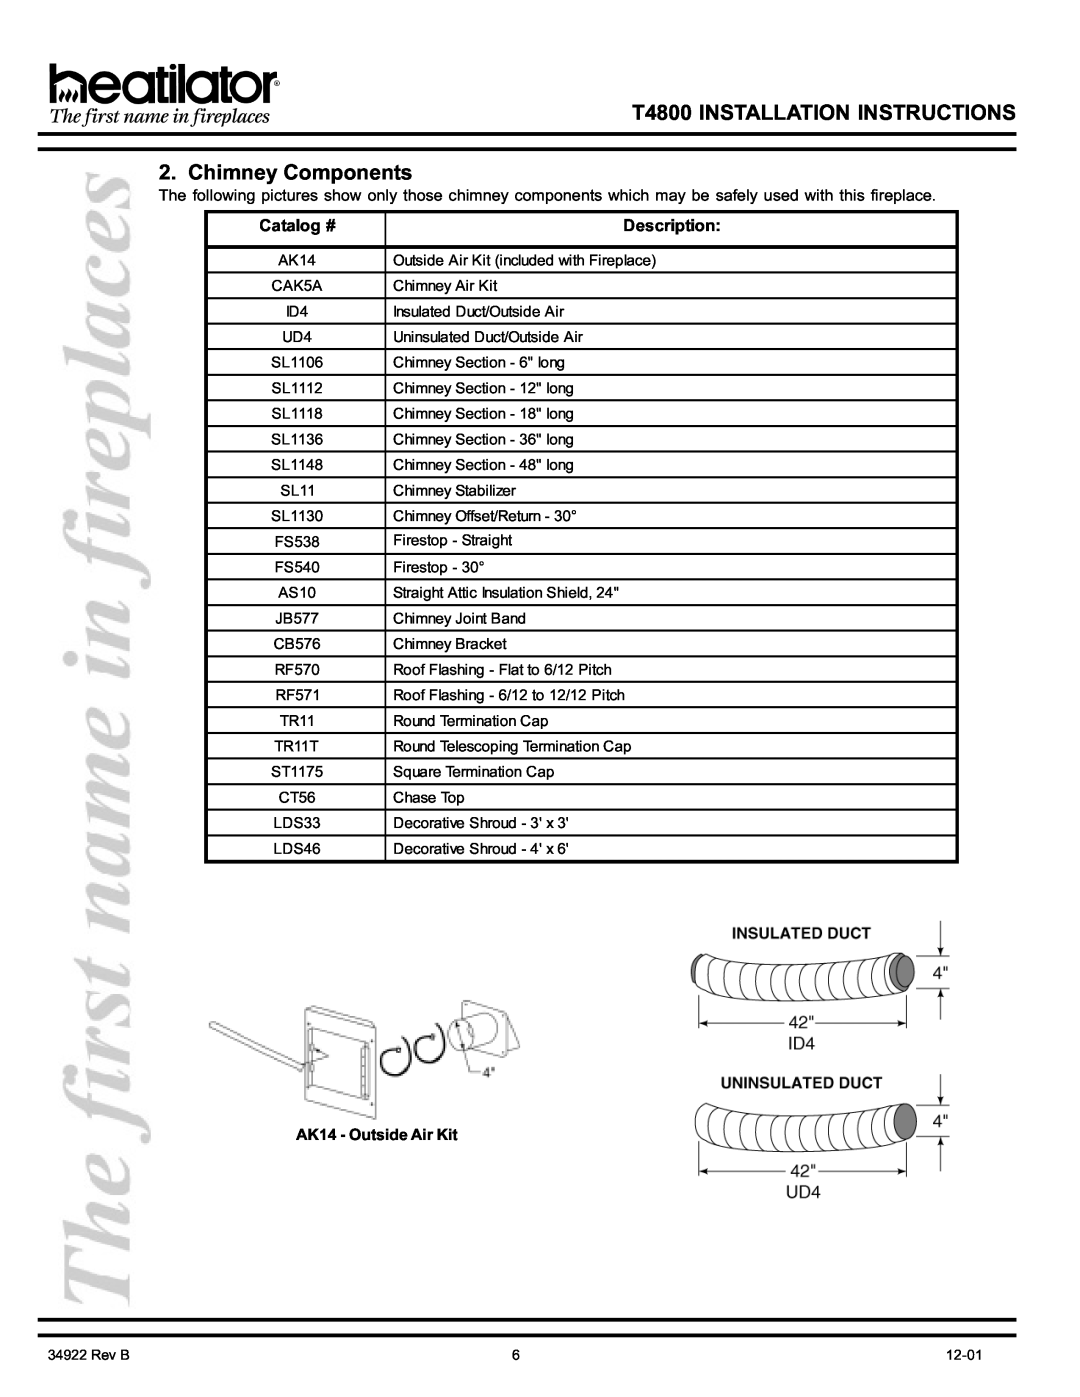 Heatiator manual Chimney Components, AK14 - Outside Air Kit, T4800 INSTALLATION INSTRUCTIONS, Catalog #, Description 